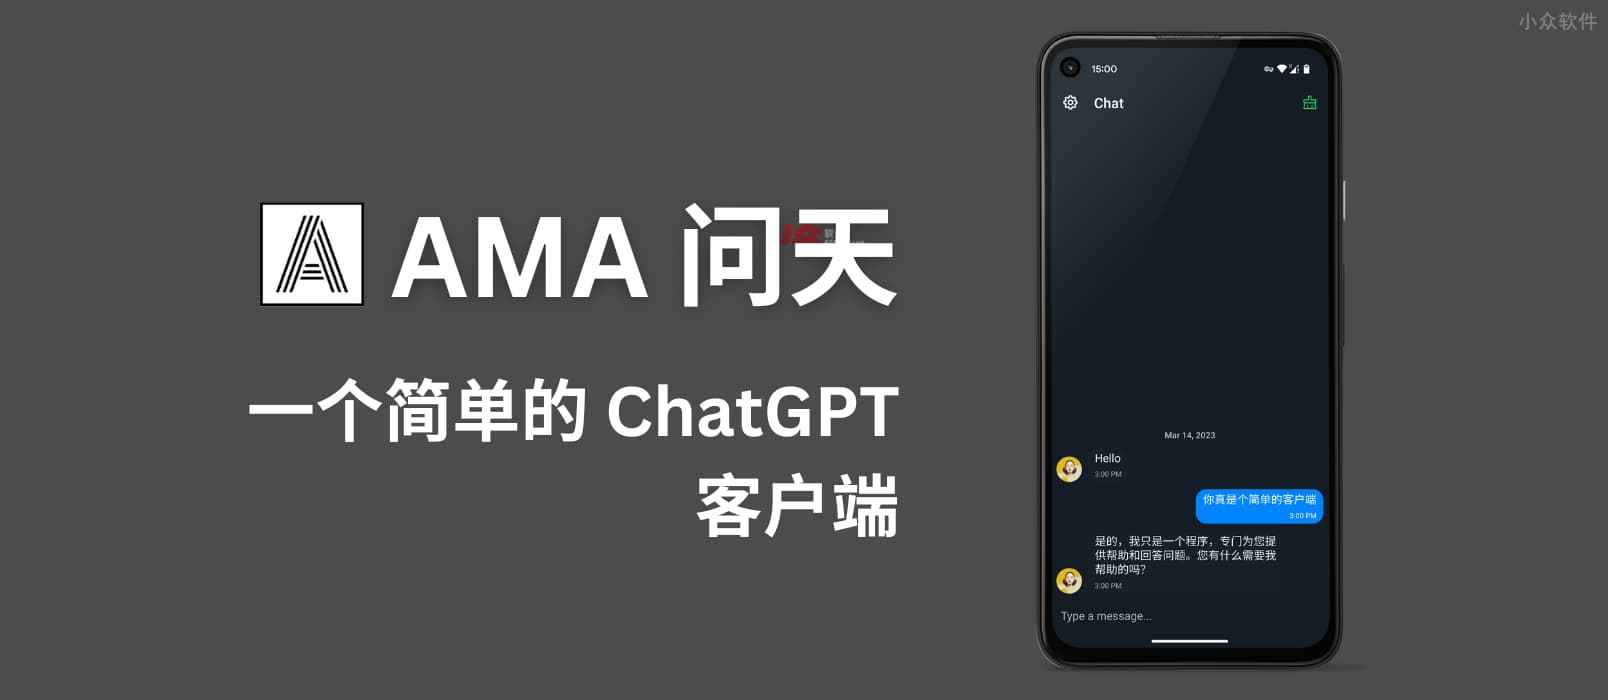 AMA 问天 – 第三方 ChatGPT 客户端[Android]